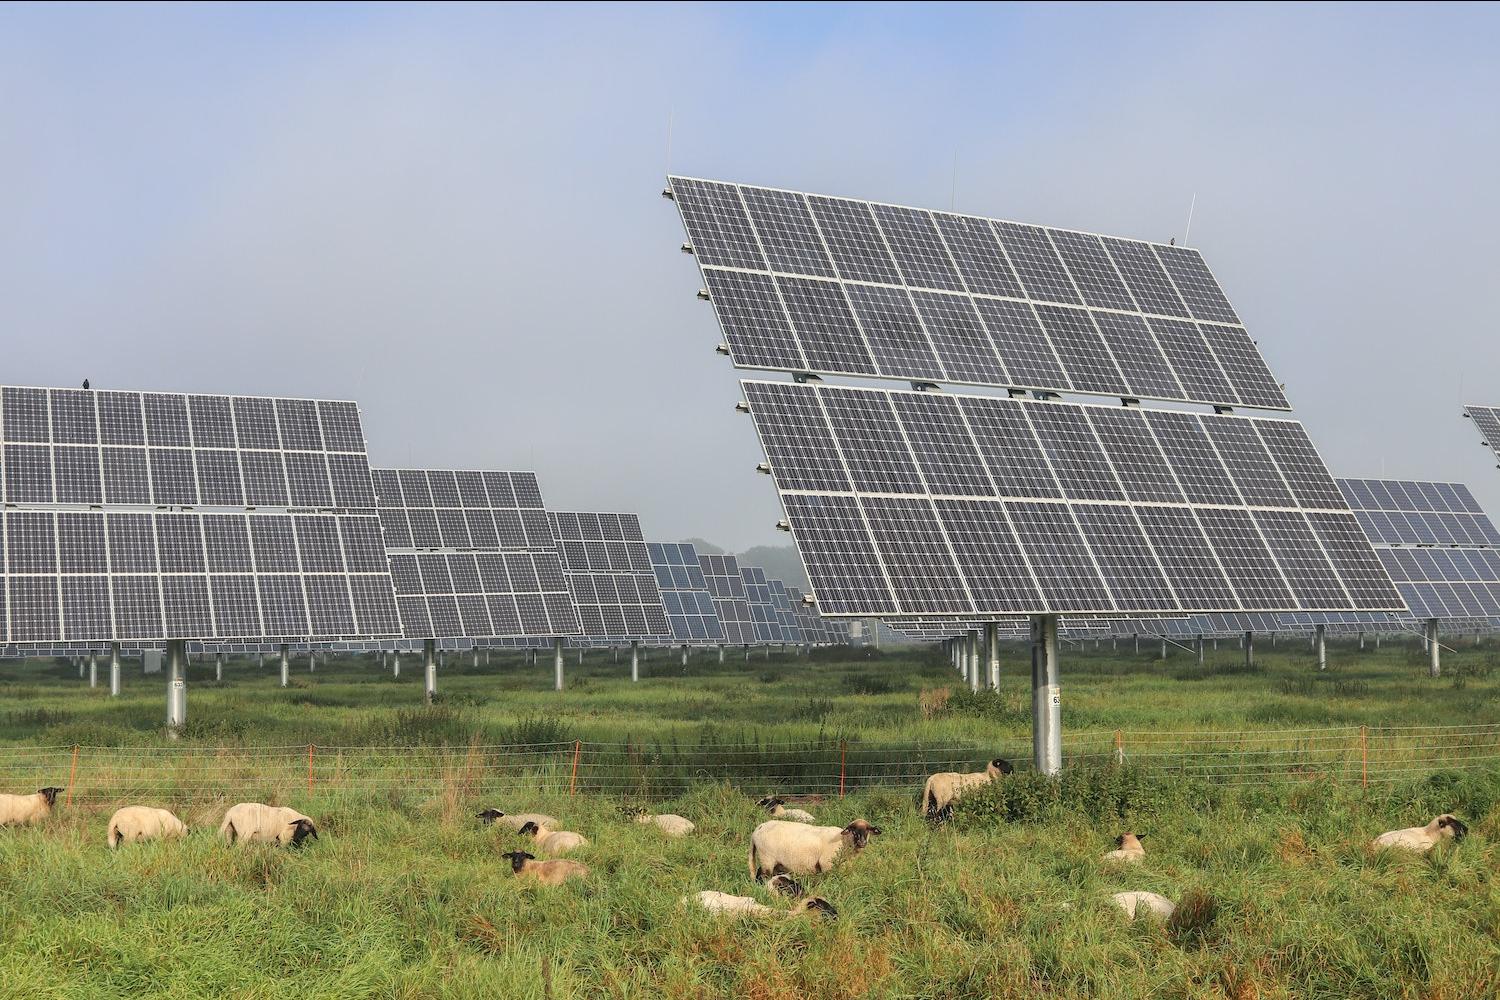 A flock of sheep grazing on a solar farm - renewable energy